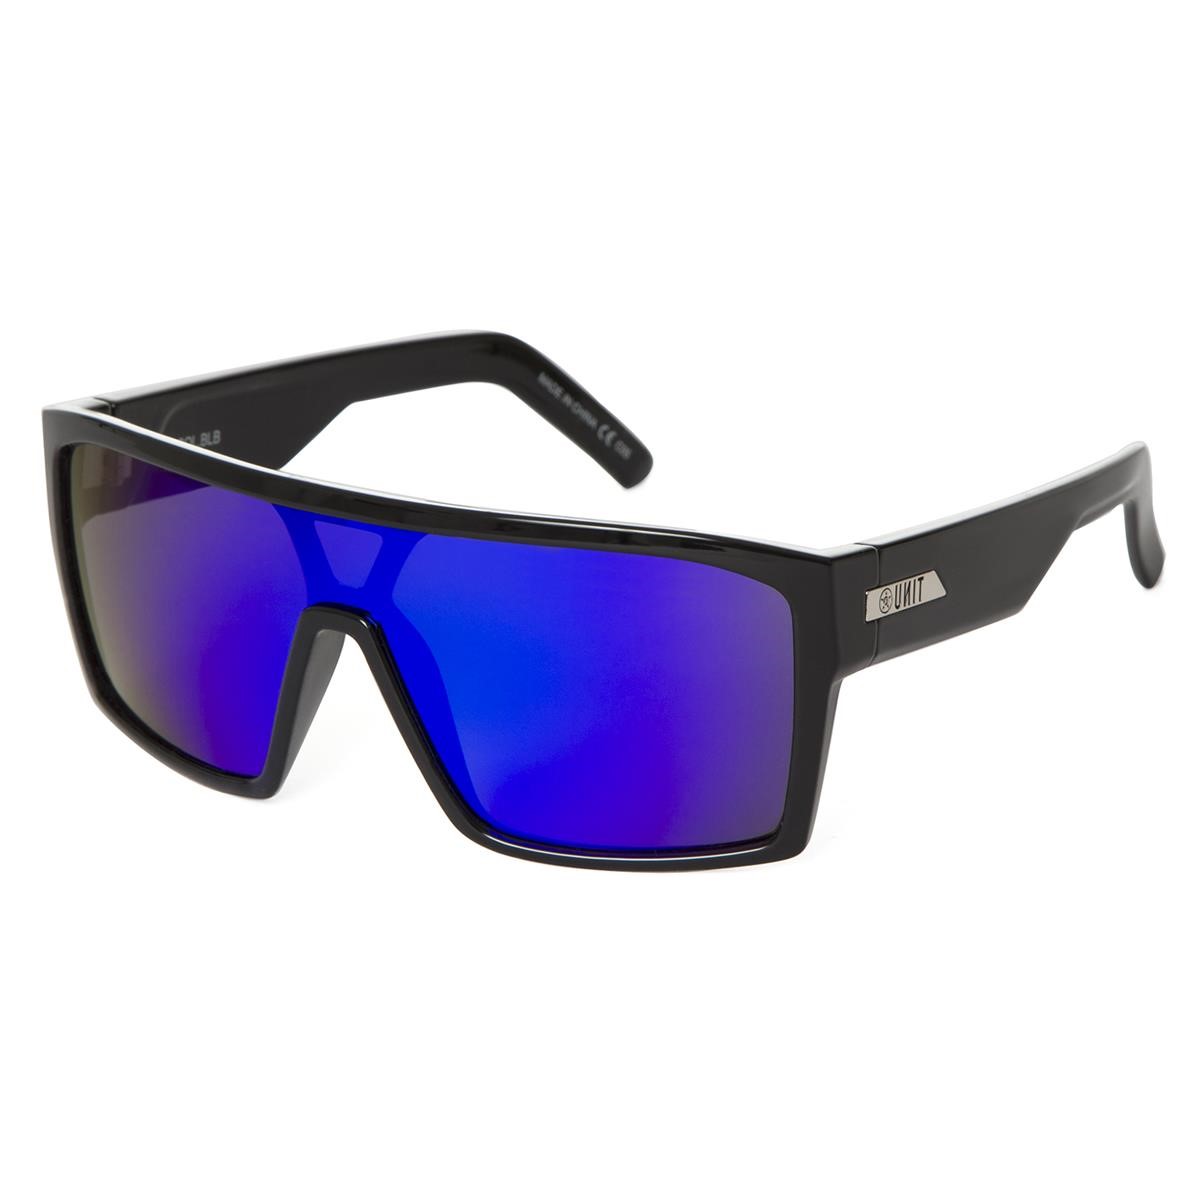 Unit Sunglasses Command Black/Blue